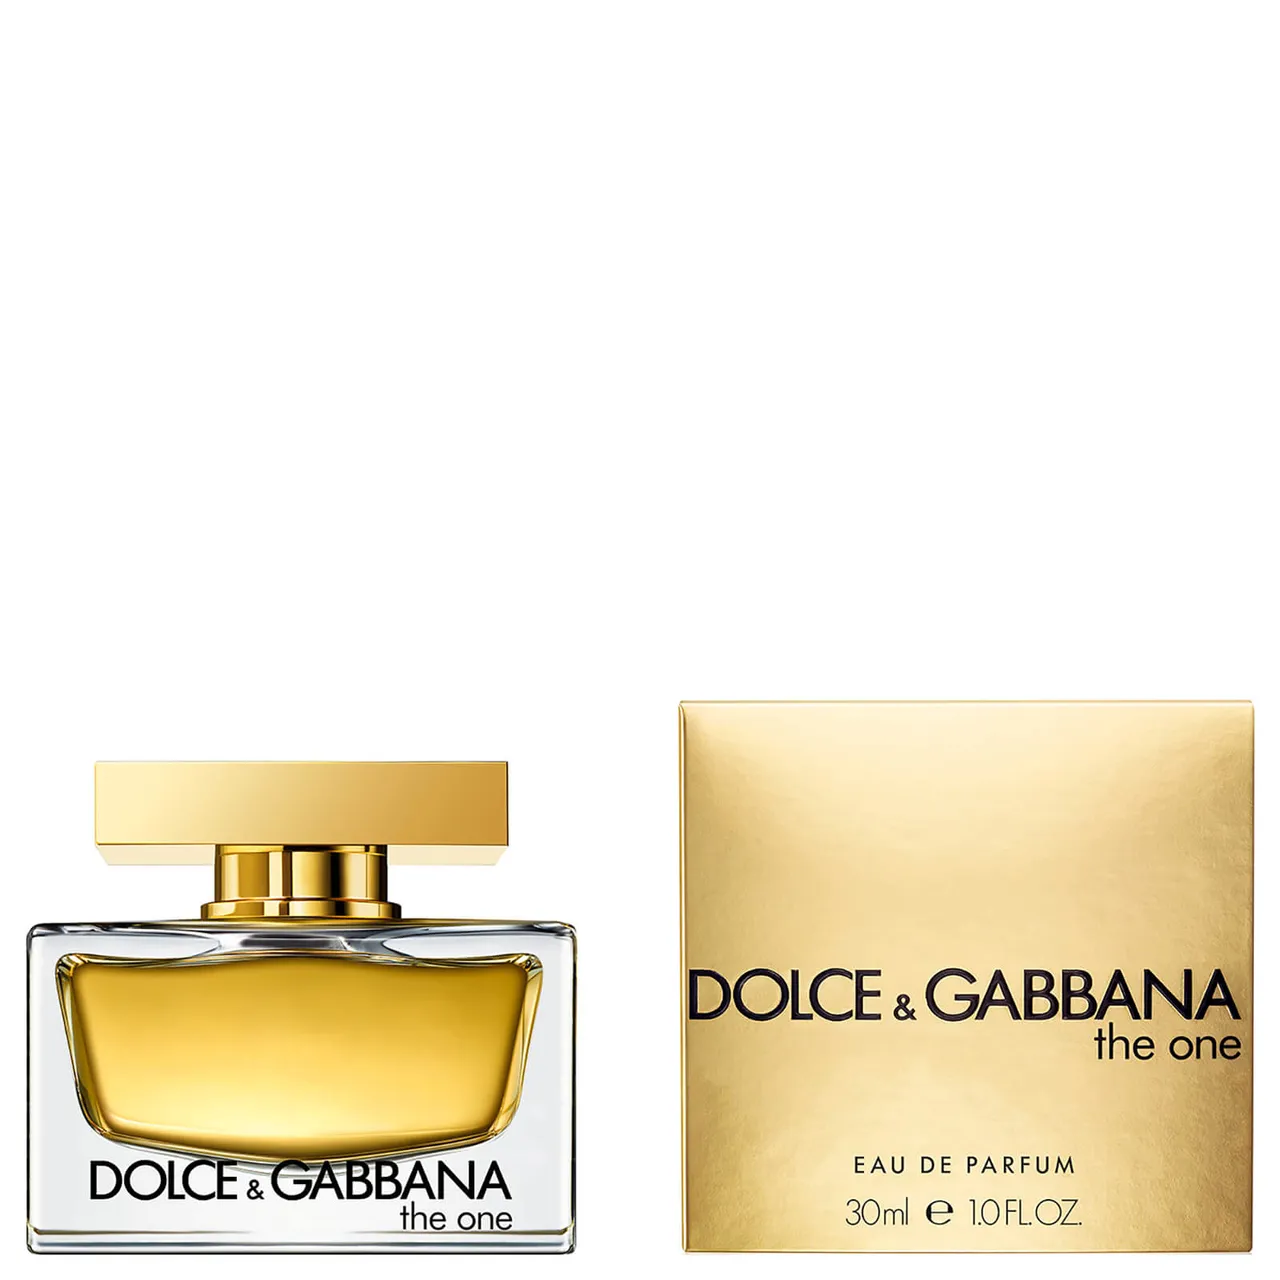 Dolce&Gabbana The One Eau de Parfum 30ml